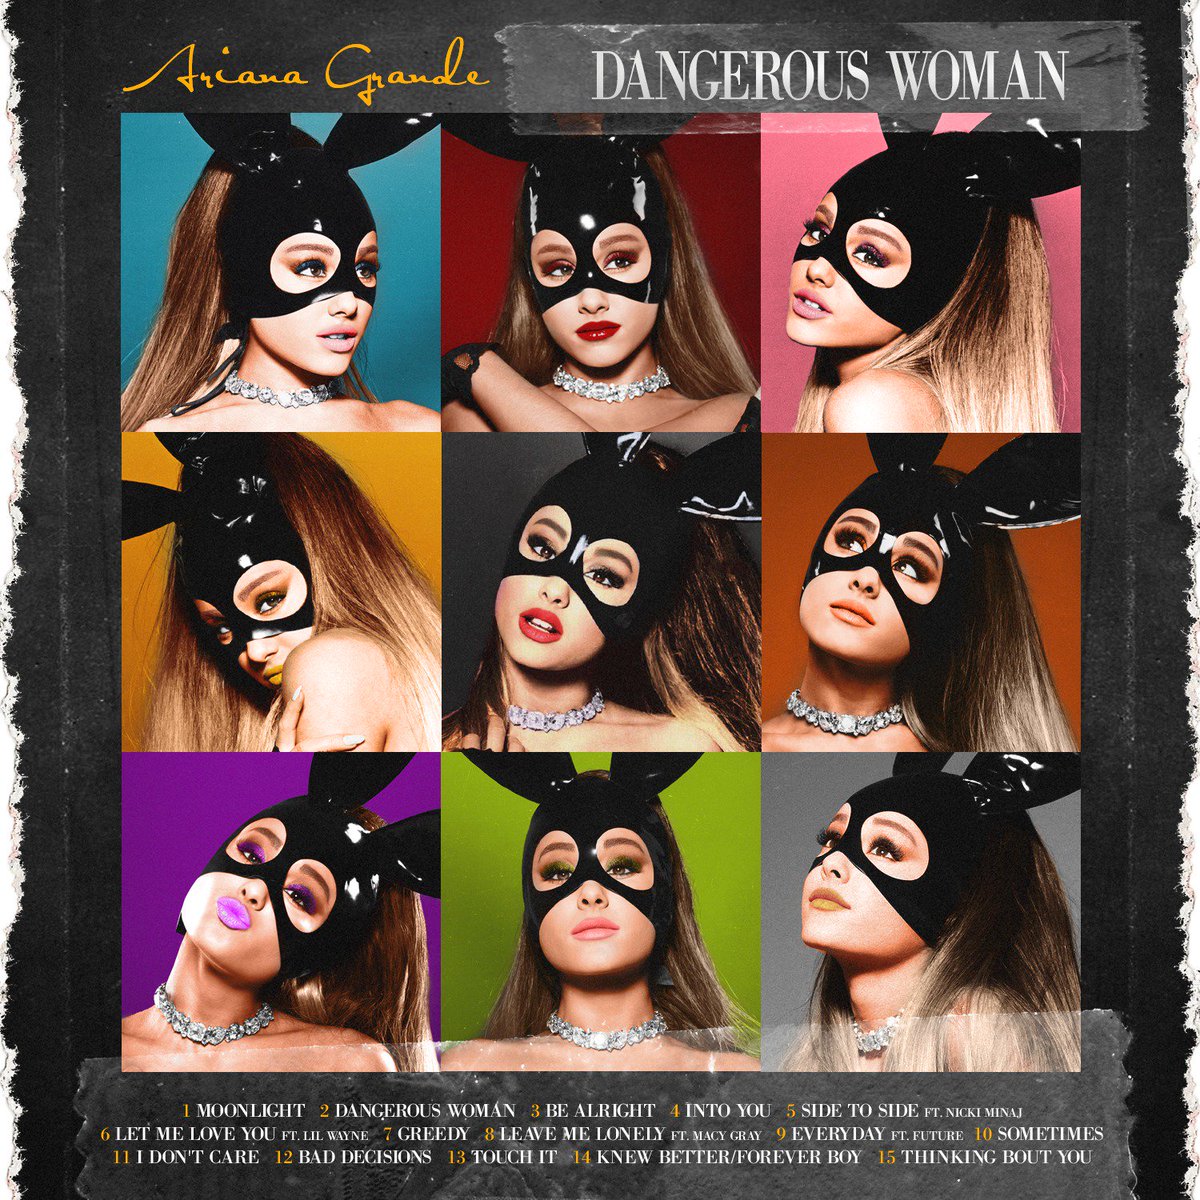 Dangerous Woman(愛莉安娜·格蘭德發行專輯)